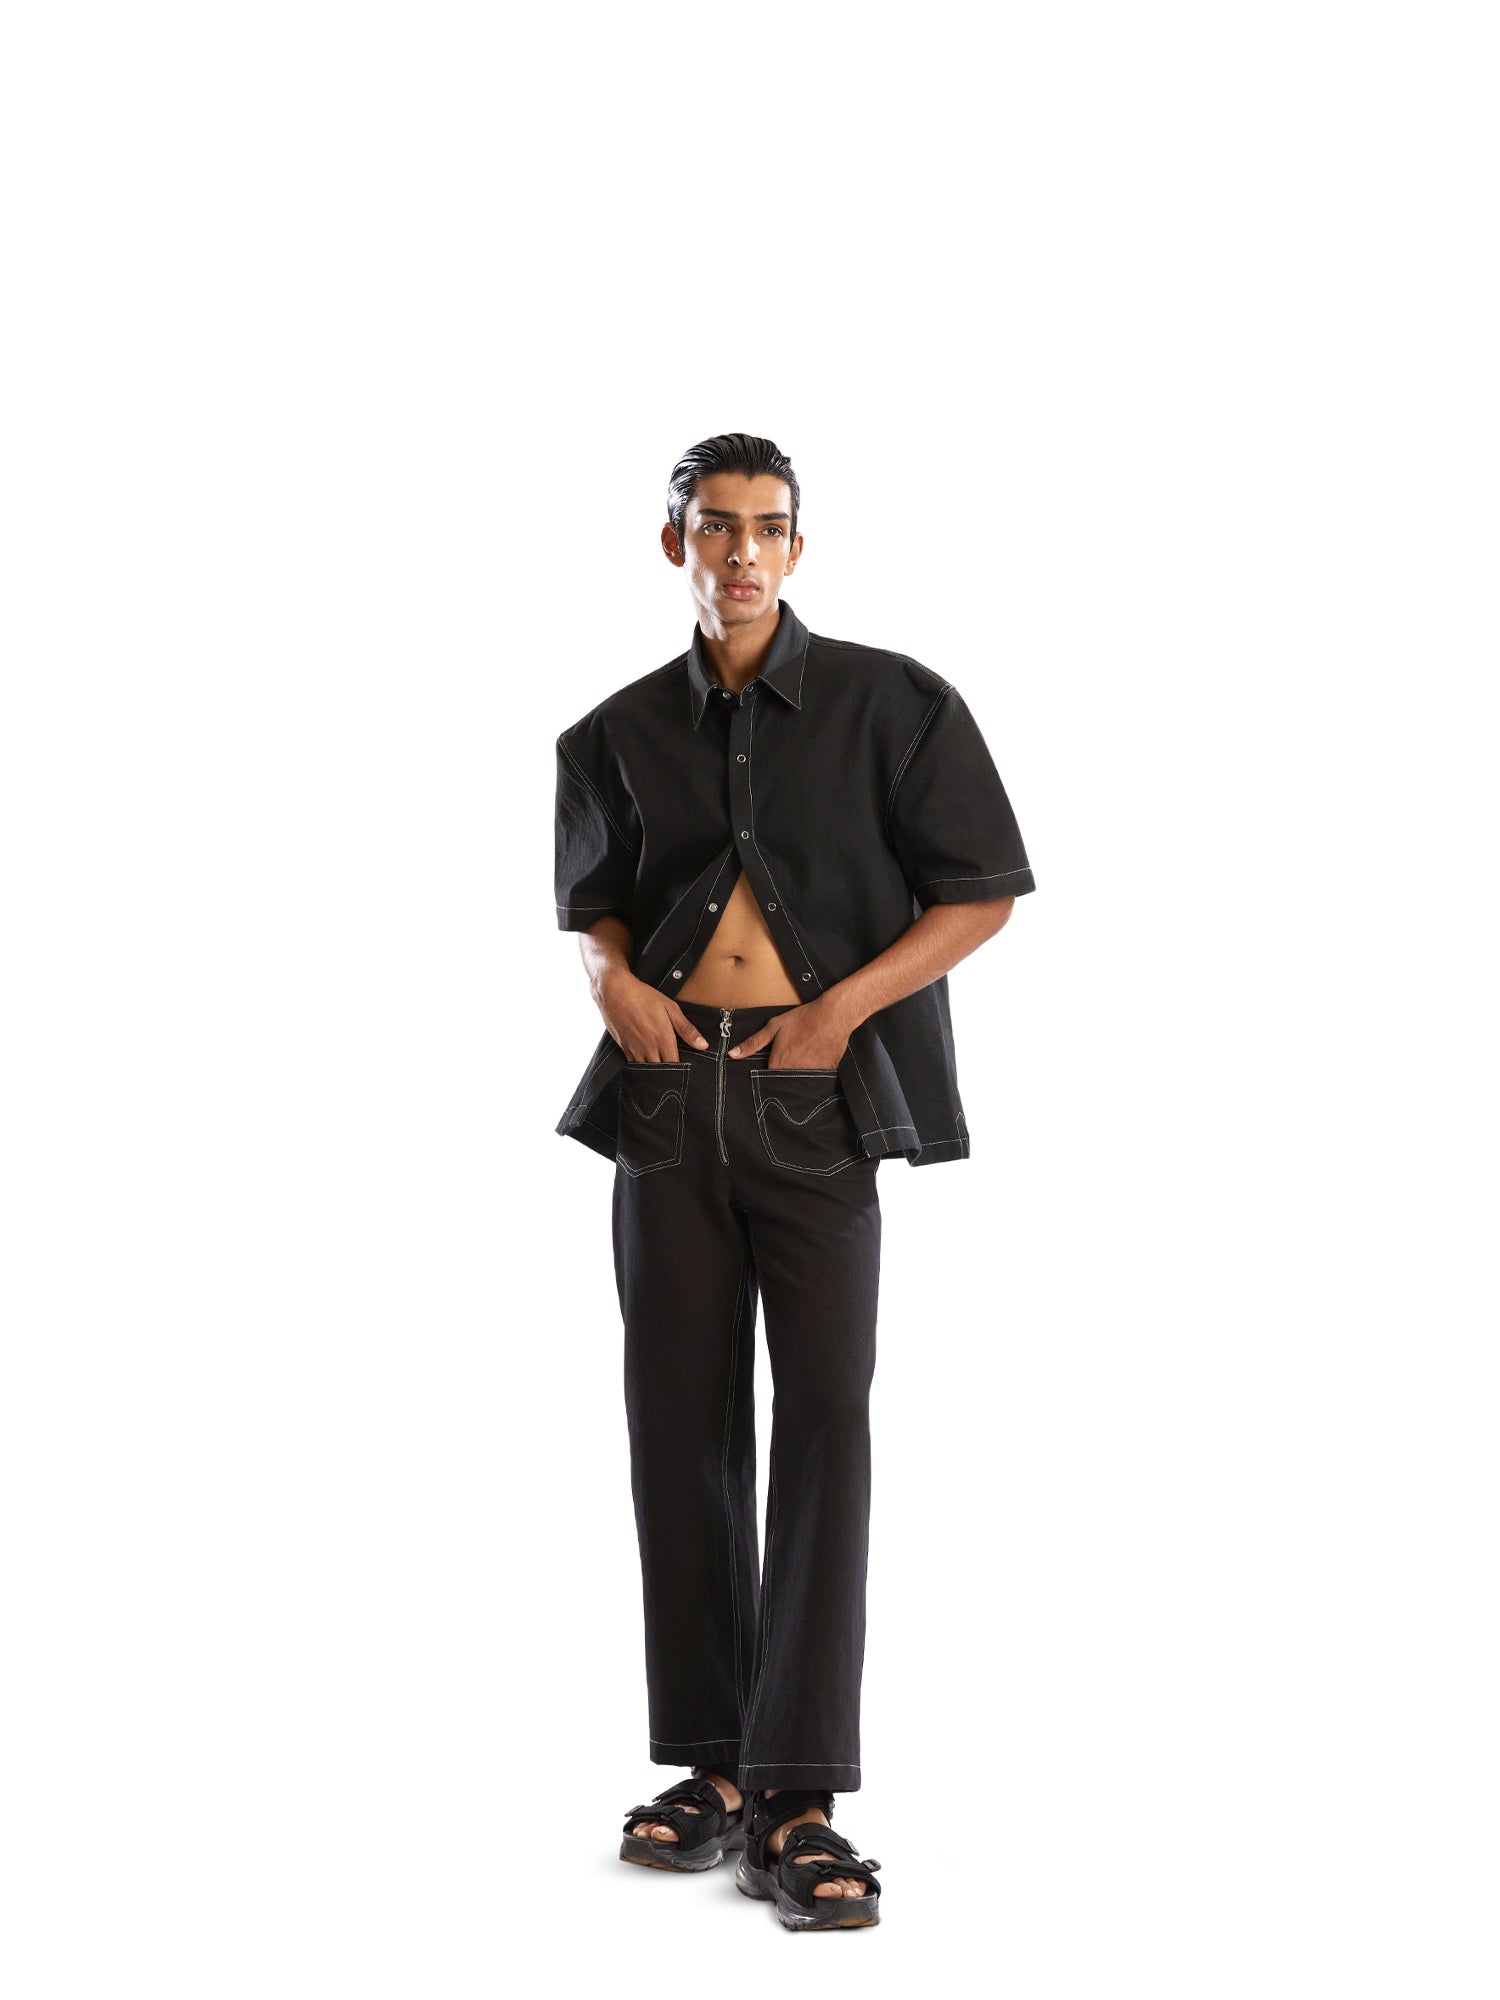 Black denim trouser with front patch pocket